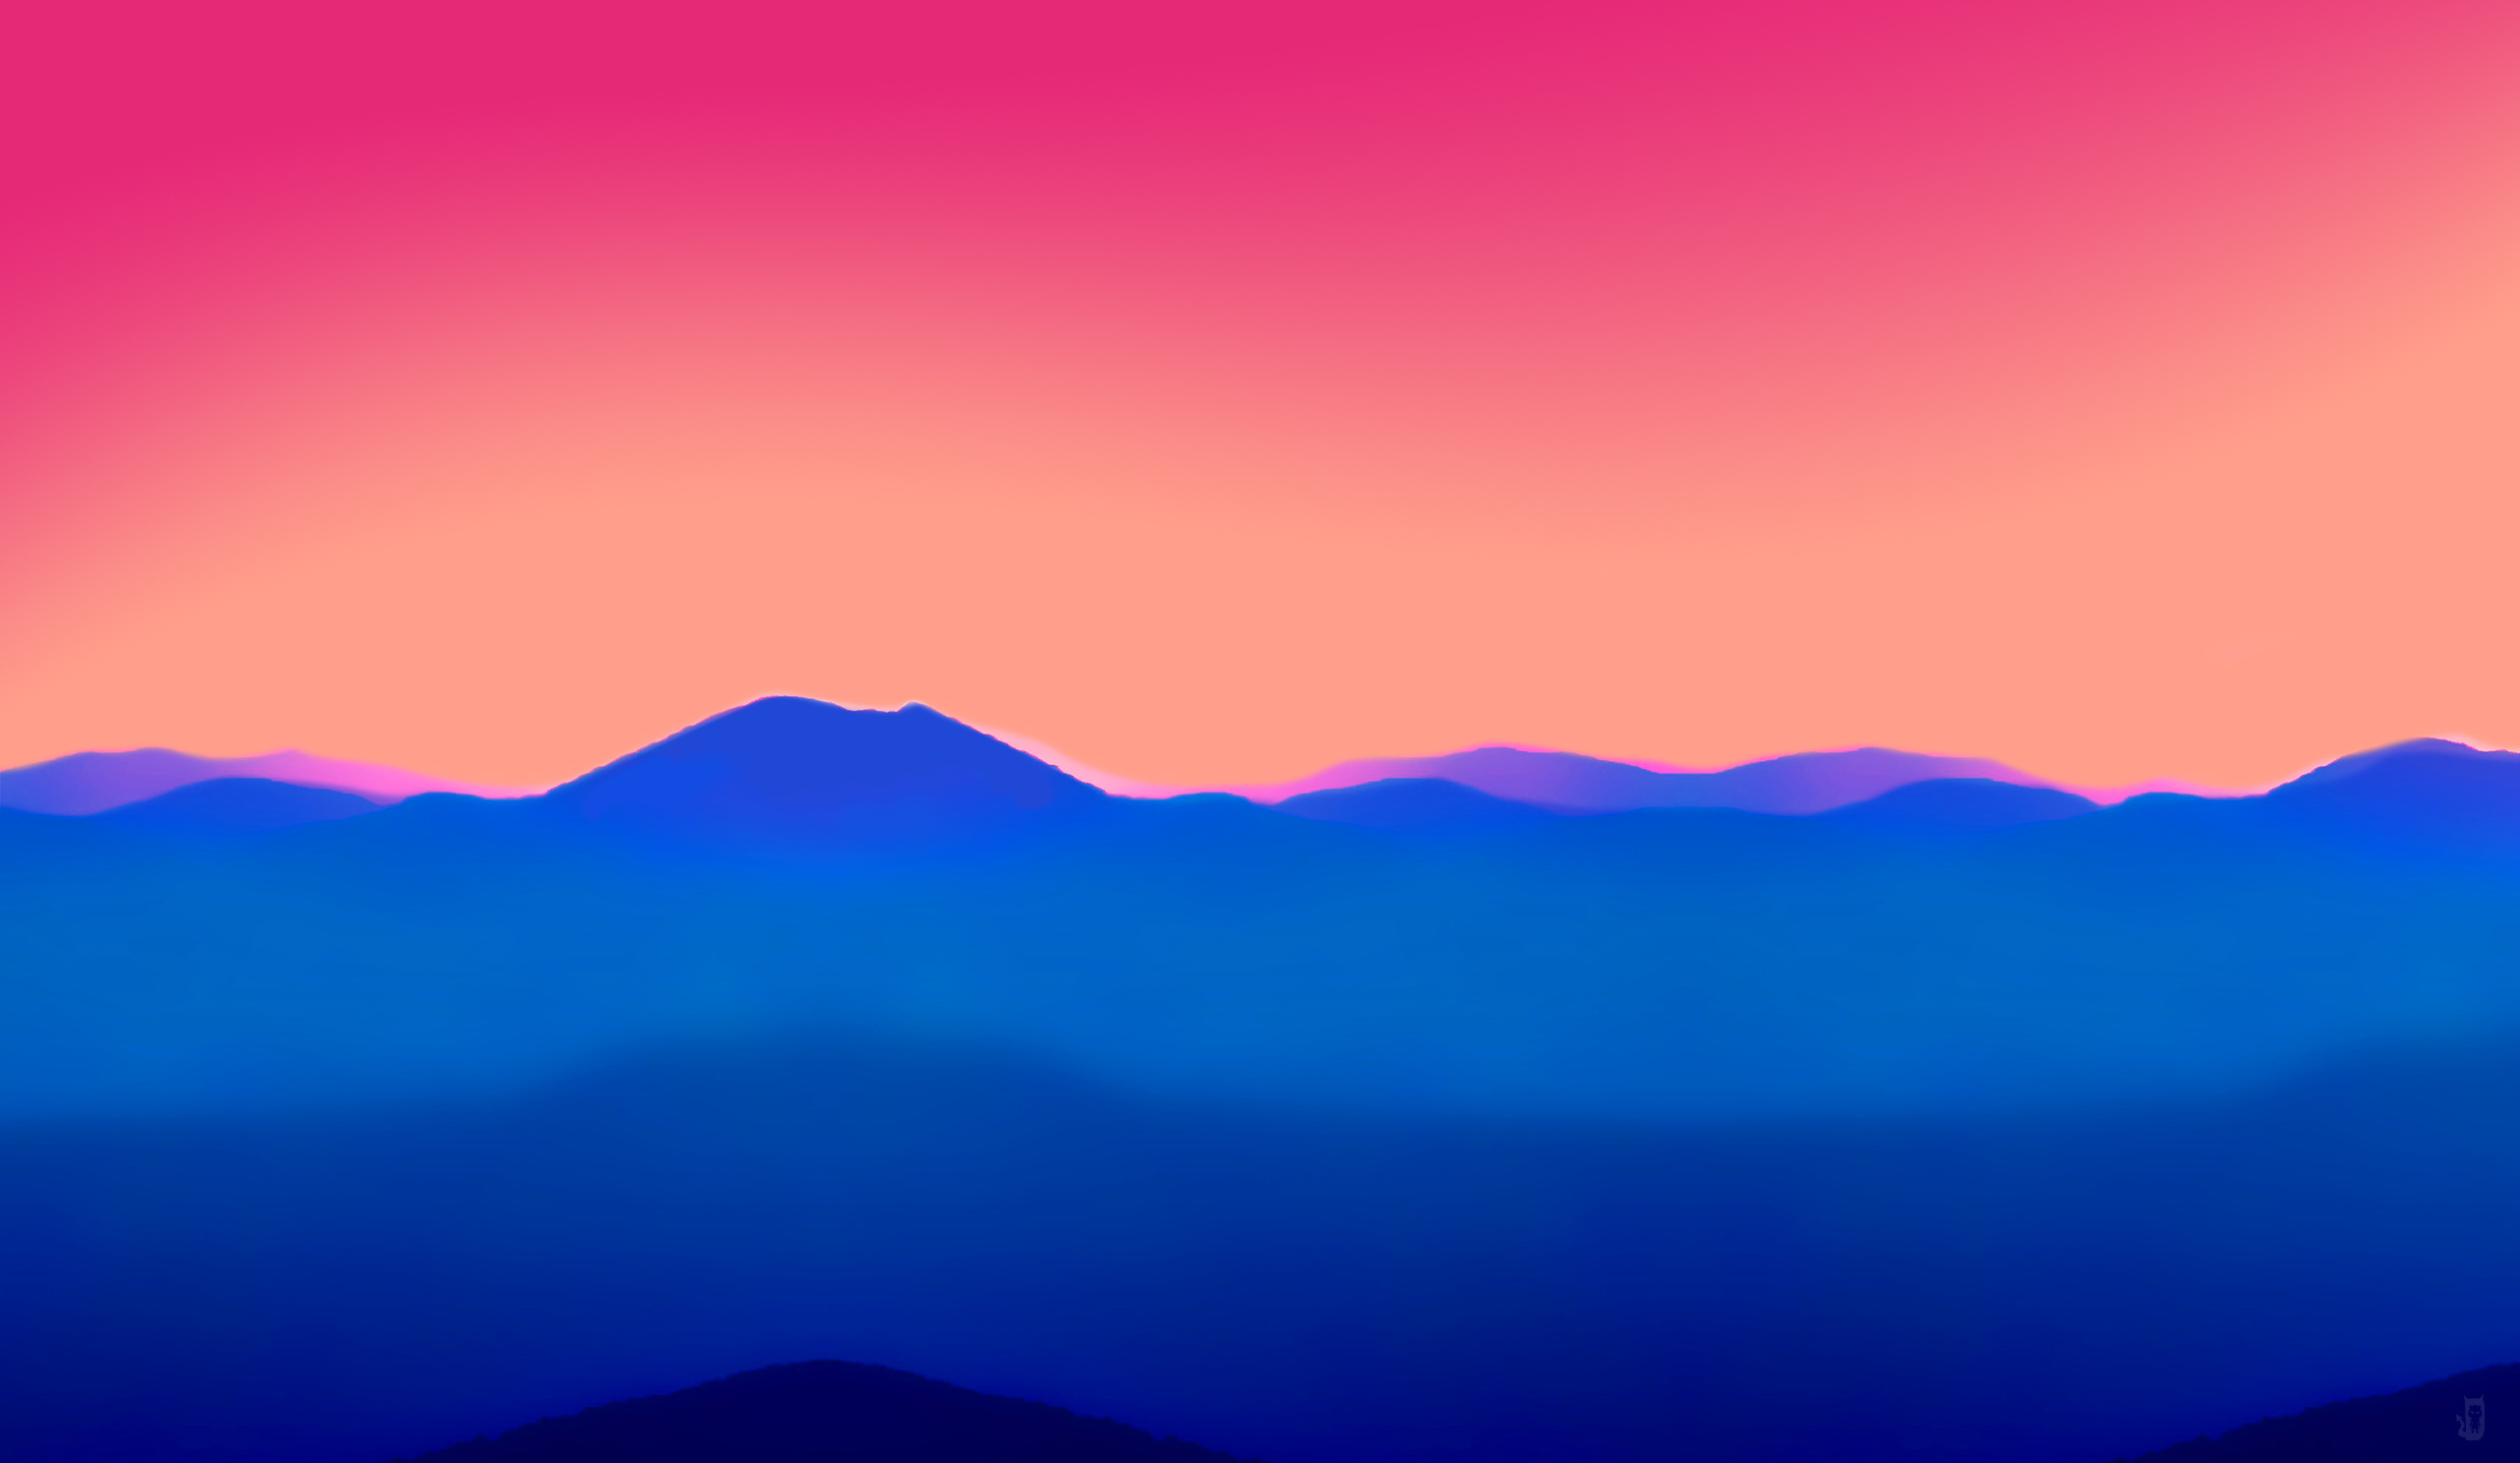 Minimal Colorful Mountains Wallpaper, HD Minimalist 4K Wallpapers